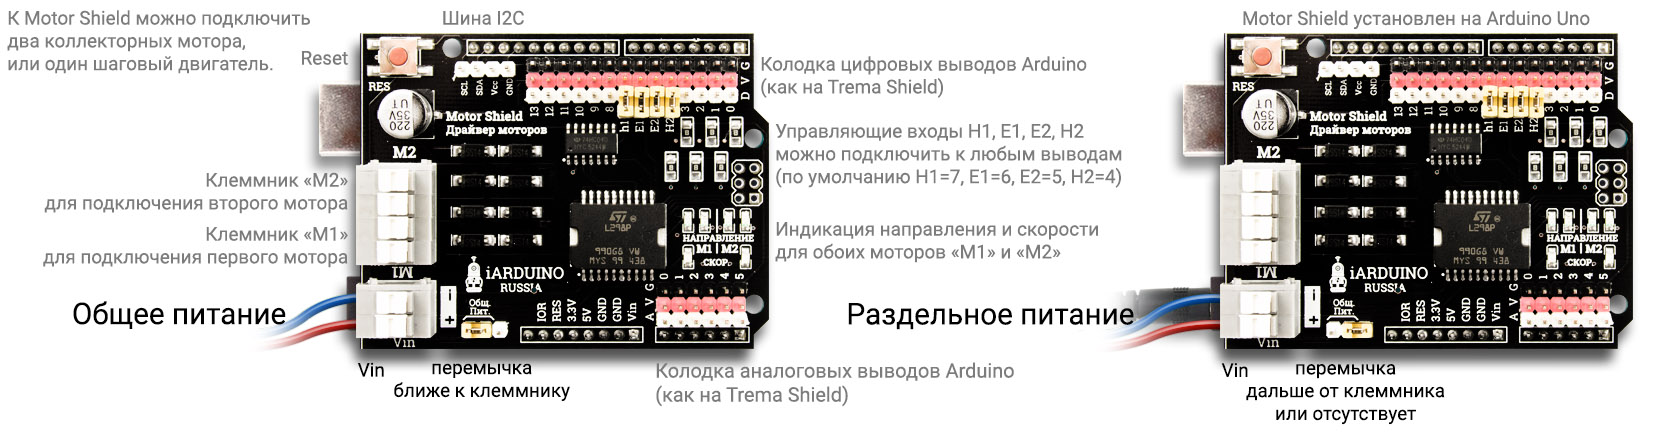 Назначение выводов motorShield на базе чипа L298